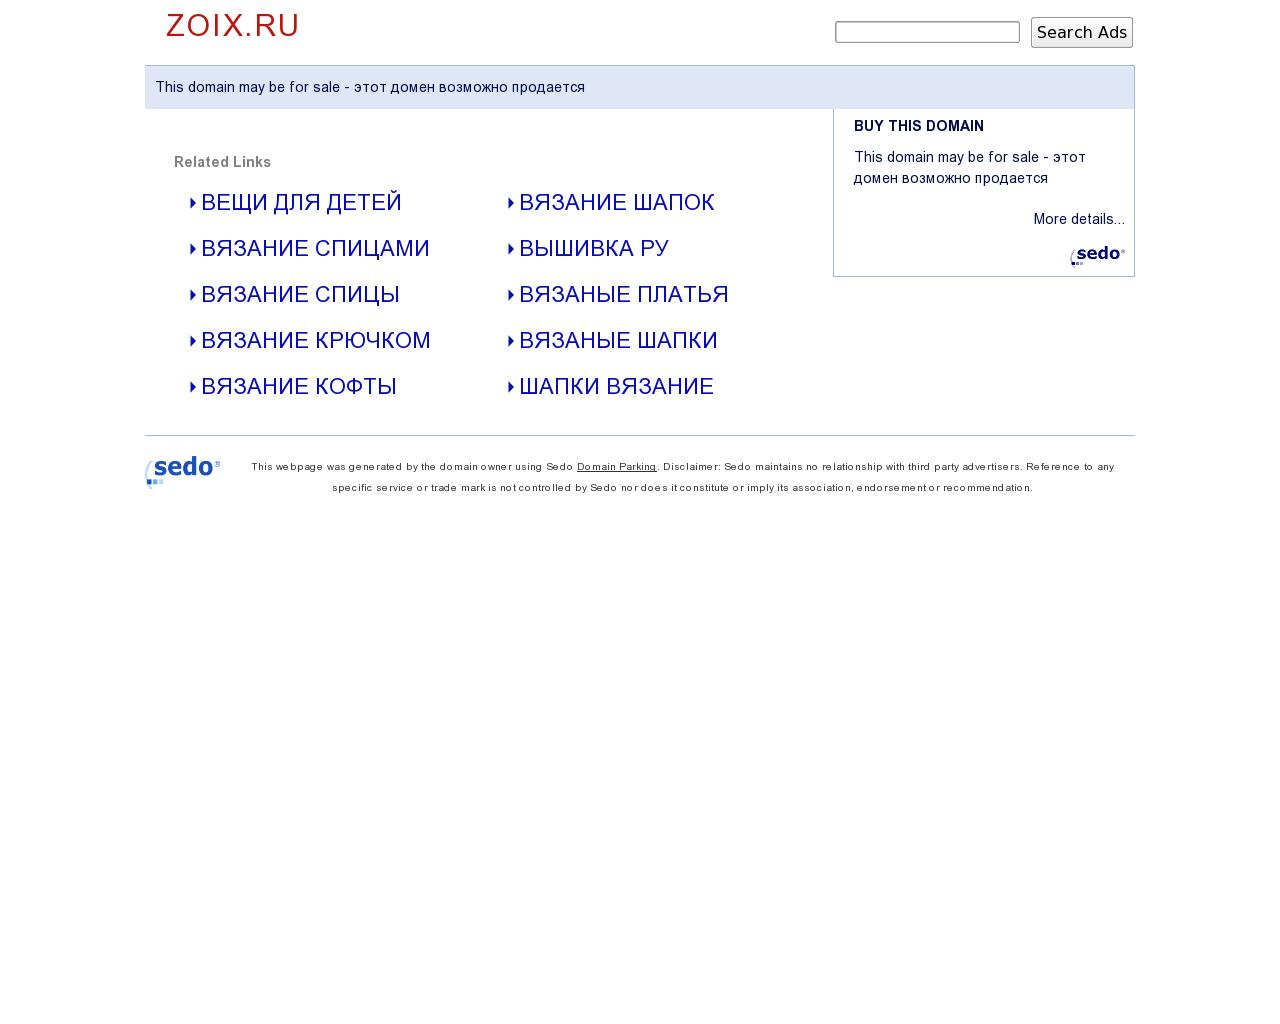 Изображение сайта zoix.ru в разрешении 1280x1024